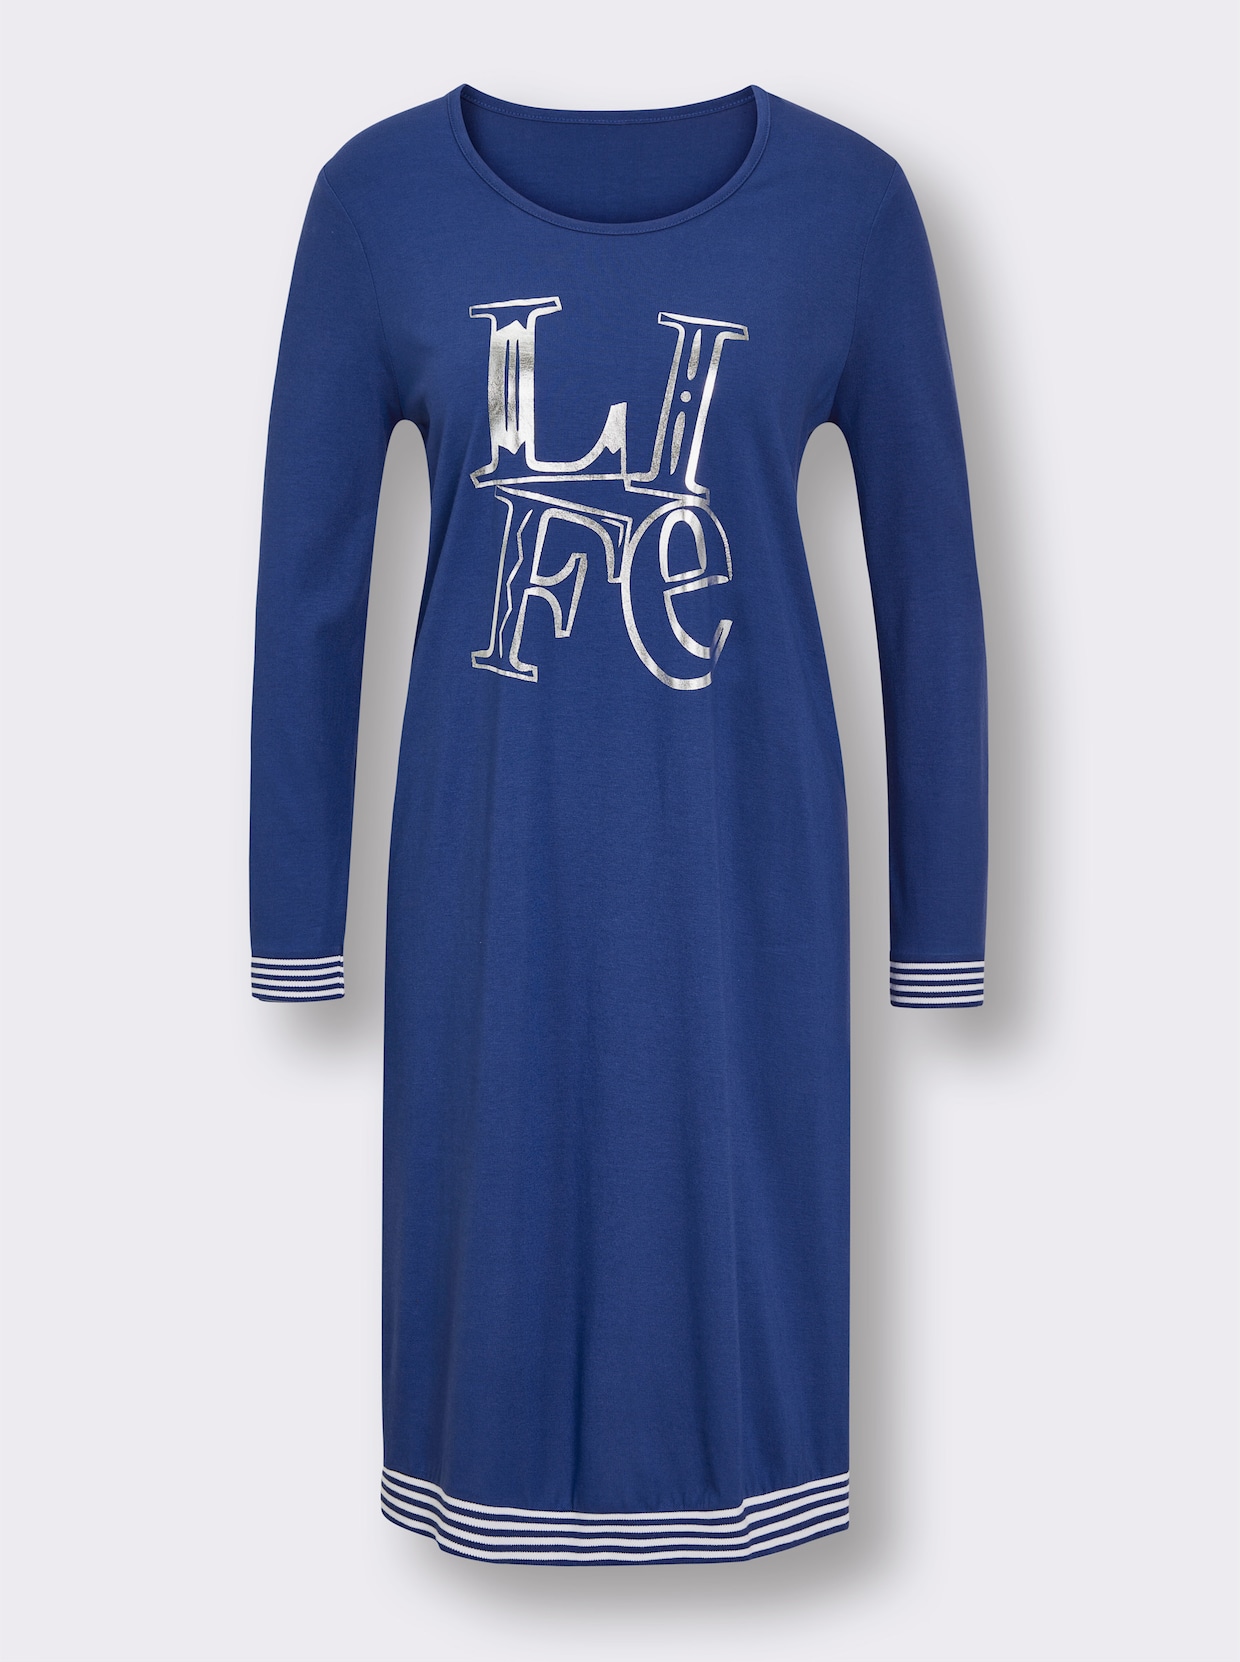 wäschepur Sleepshirt - royalblau-weiß